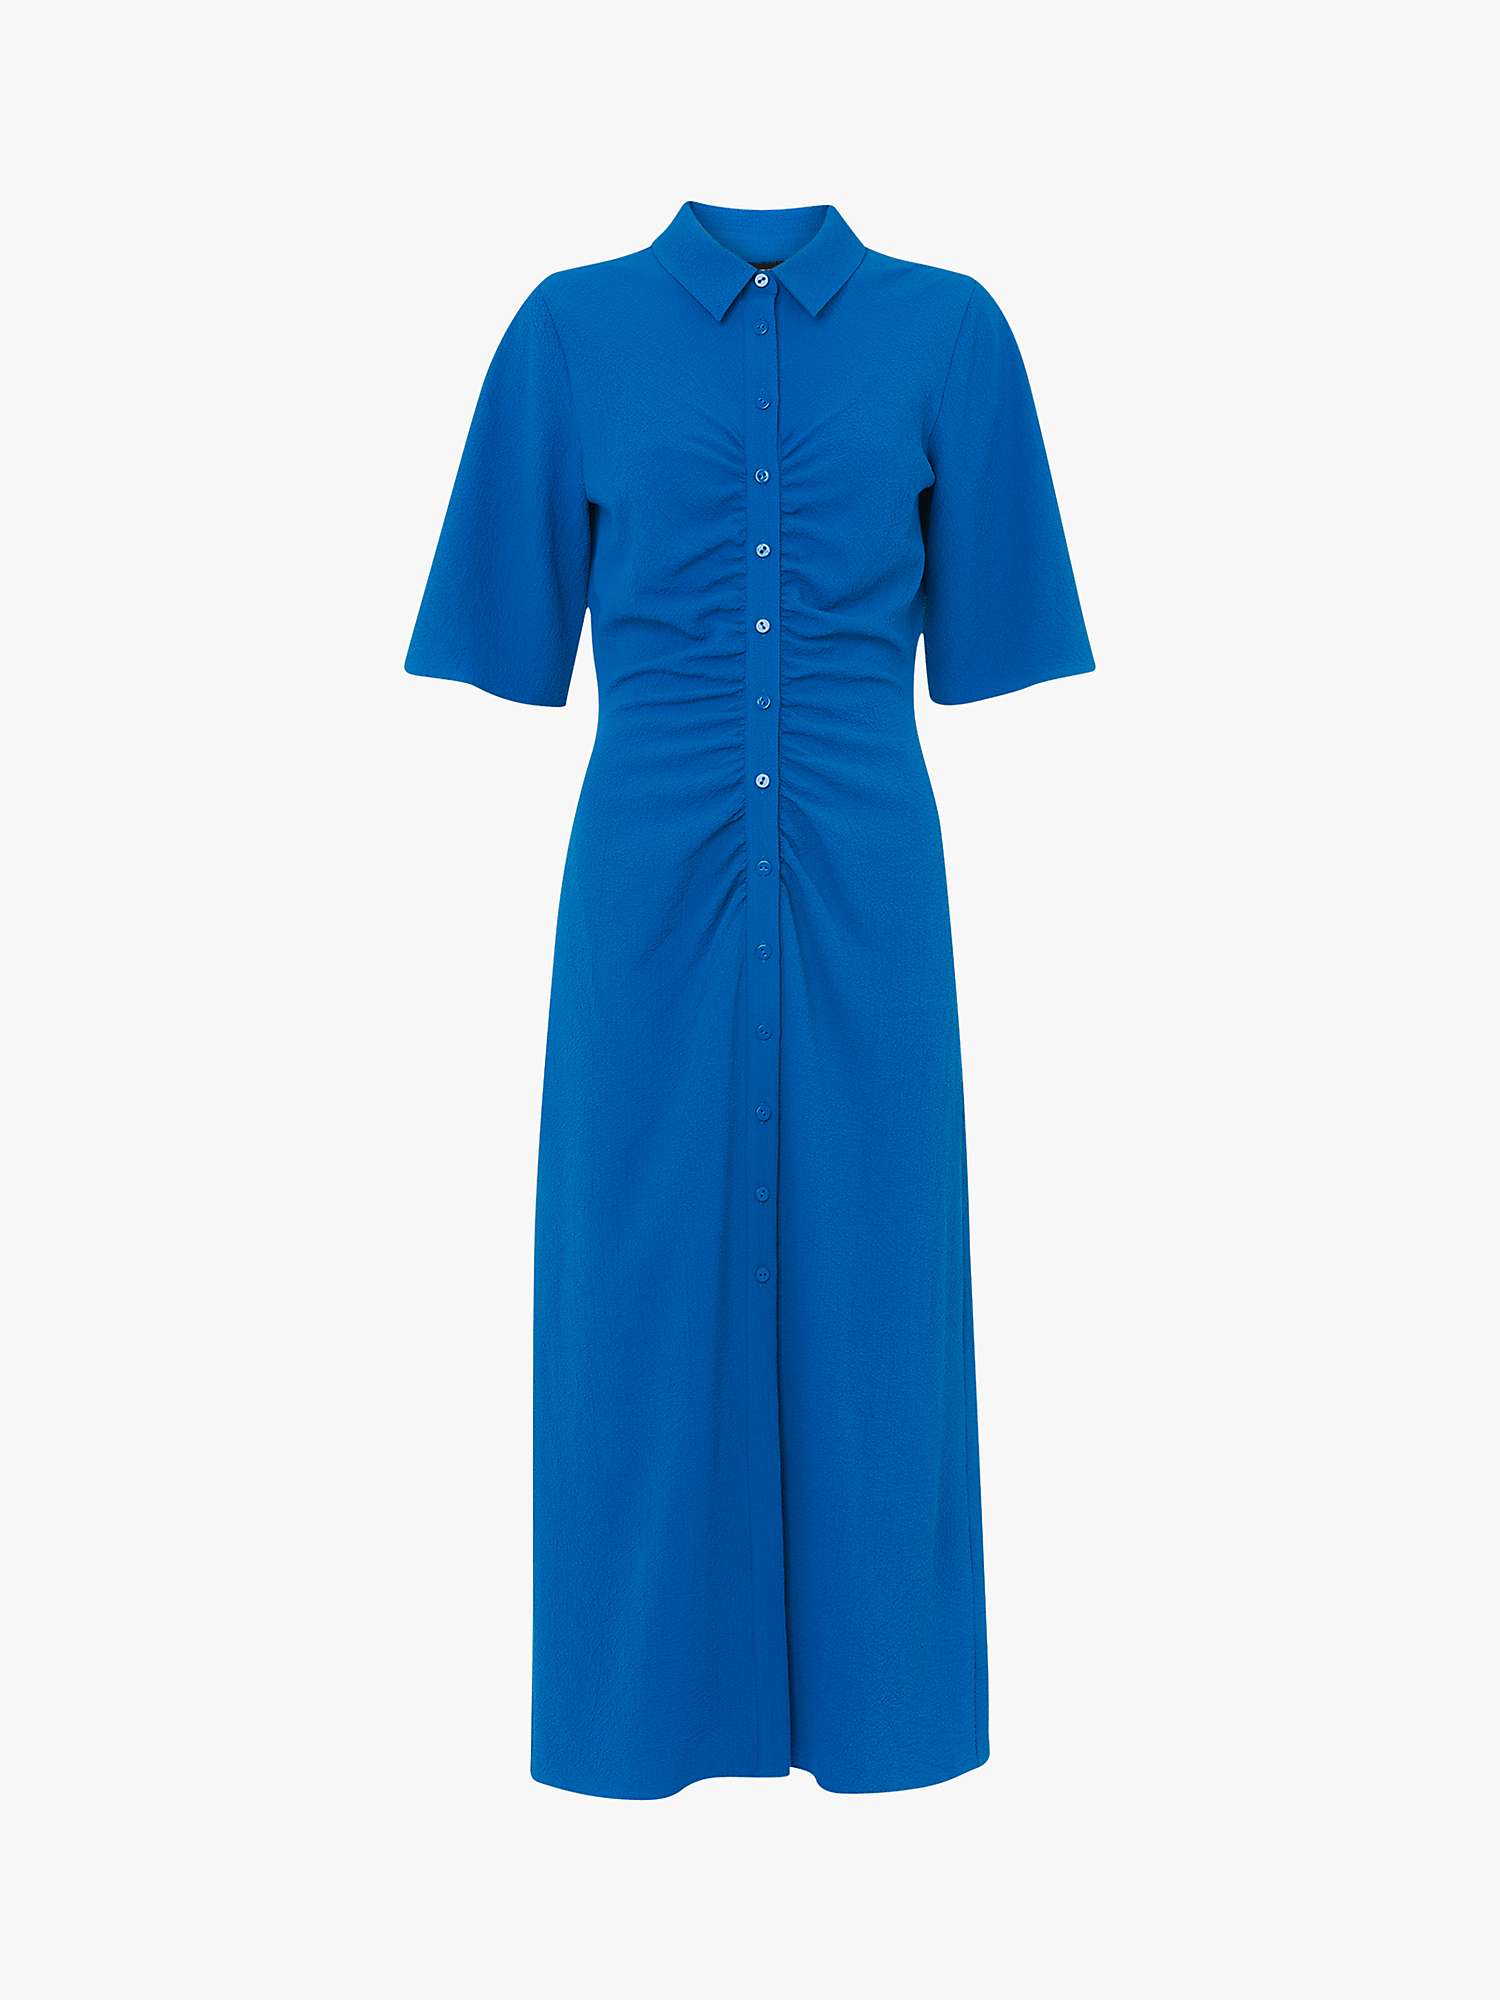 Whistles Textured Gathered Detail Midi Dress, Blue at John Lewis & Partners